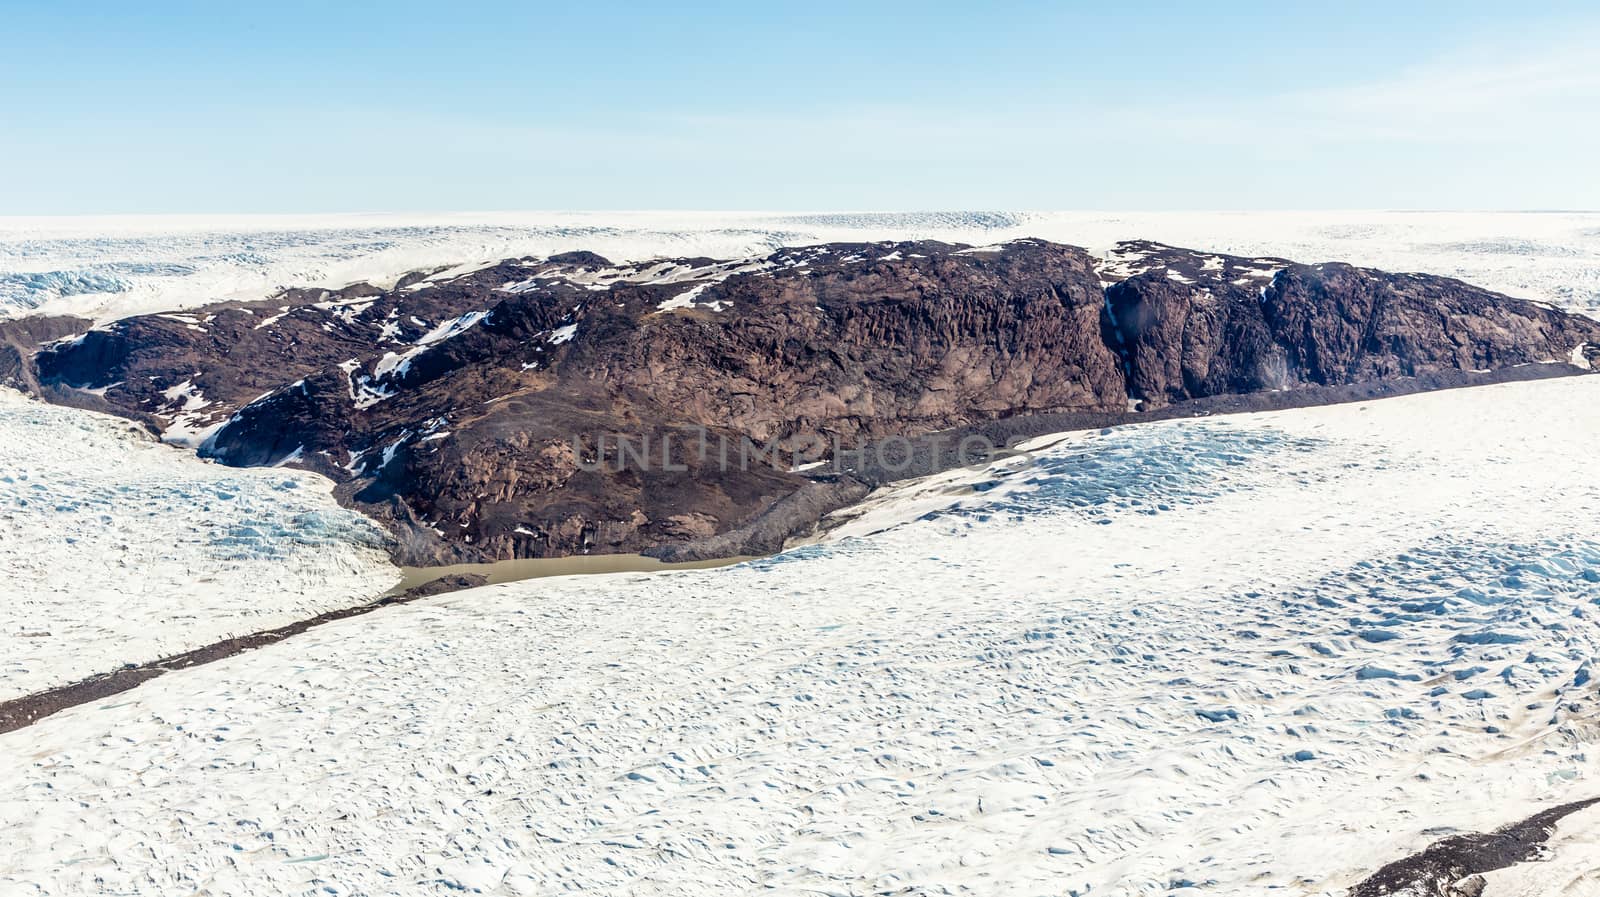 Greenlandic melting ice sheet glacier aerial view from the plane, near Kangerlussuaq, Greenland